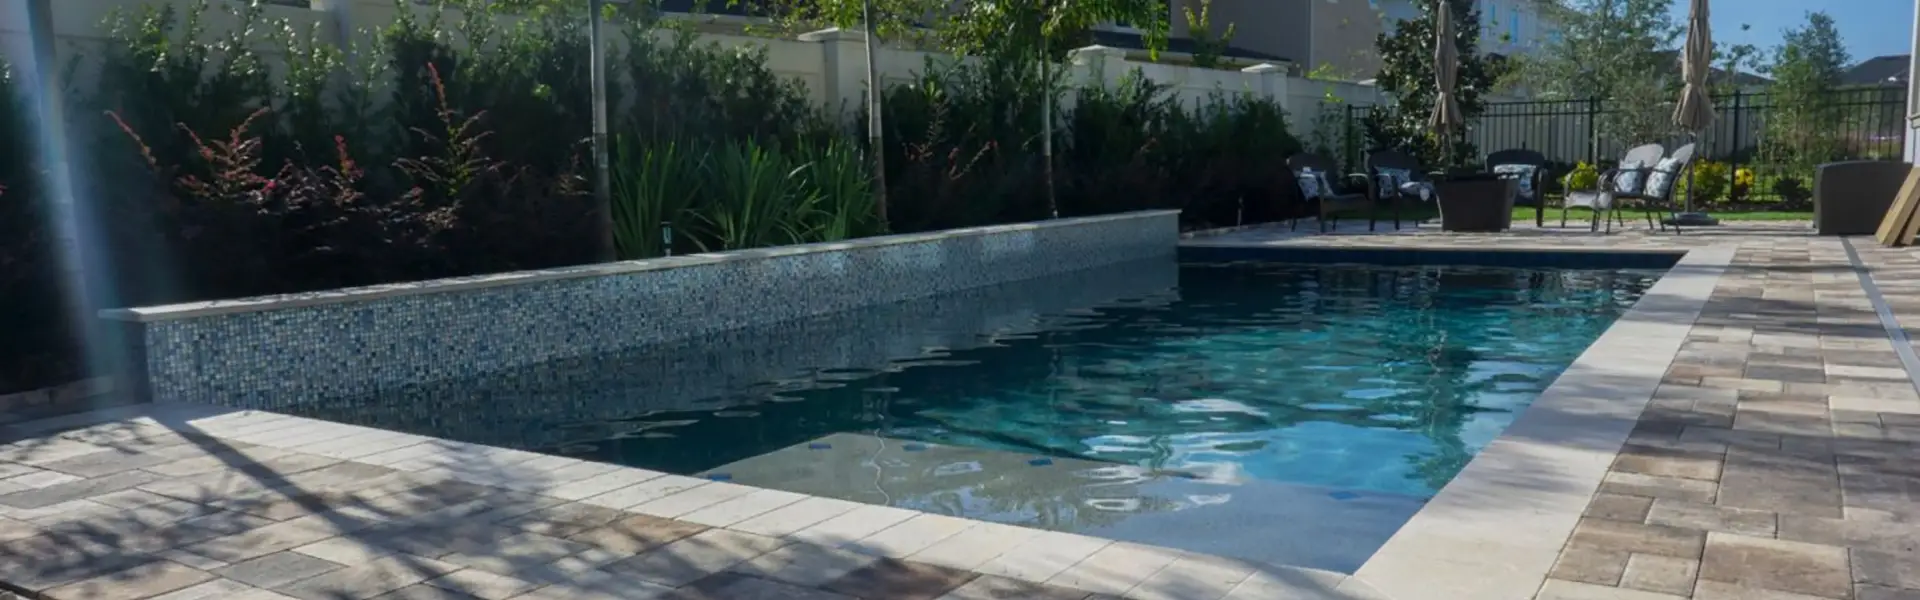 Make a Splash with Florida Pool Design Ideas!